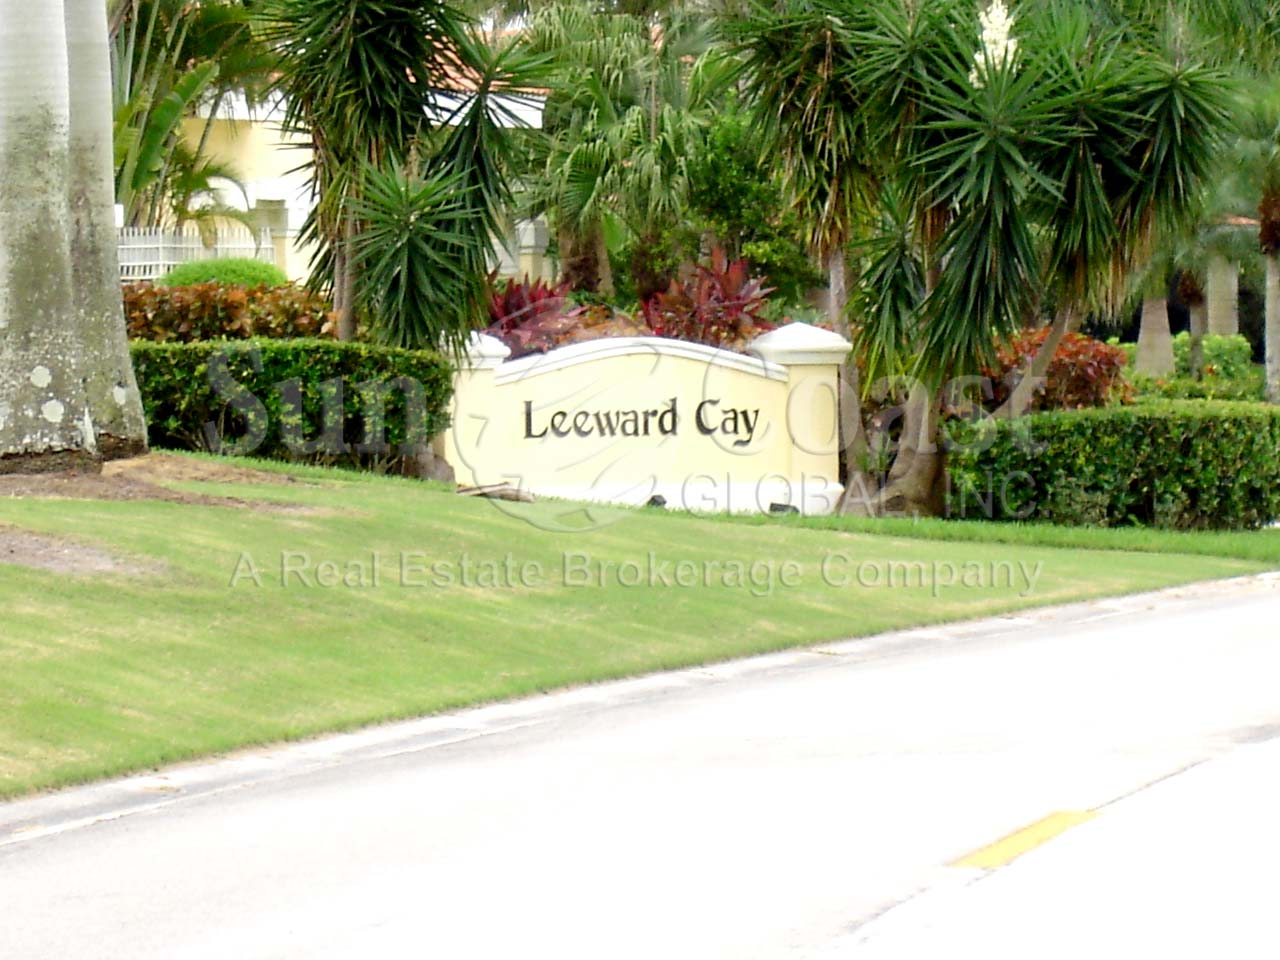 Leeward Cay Signage